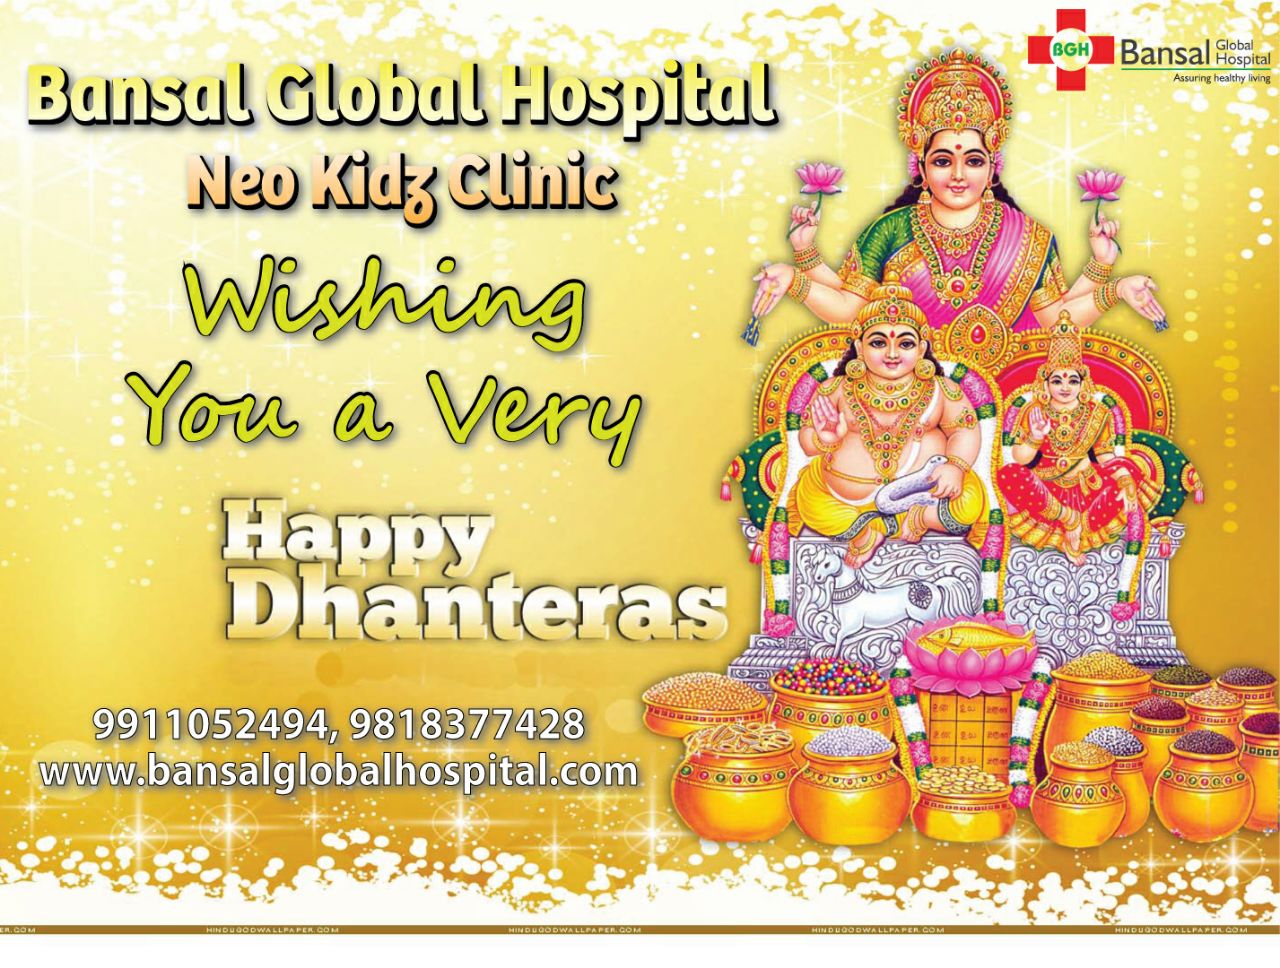 Bansal Global Hospital Happy Dhanteras